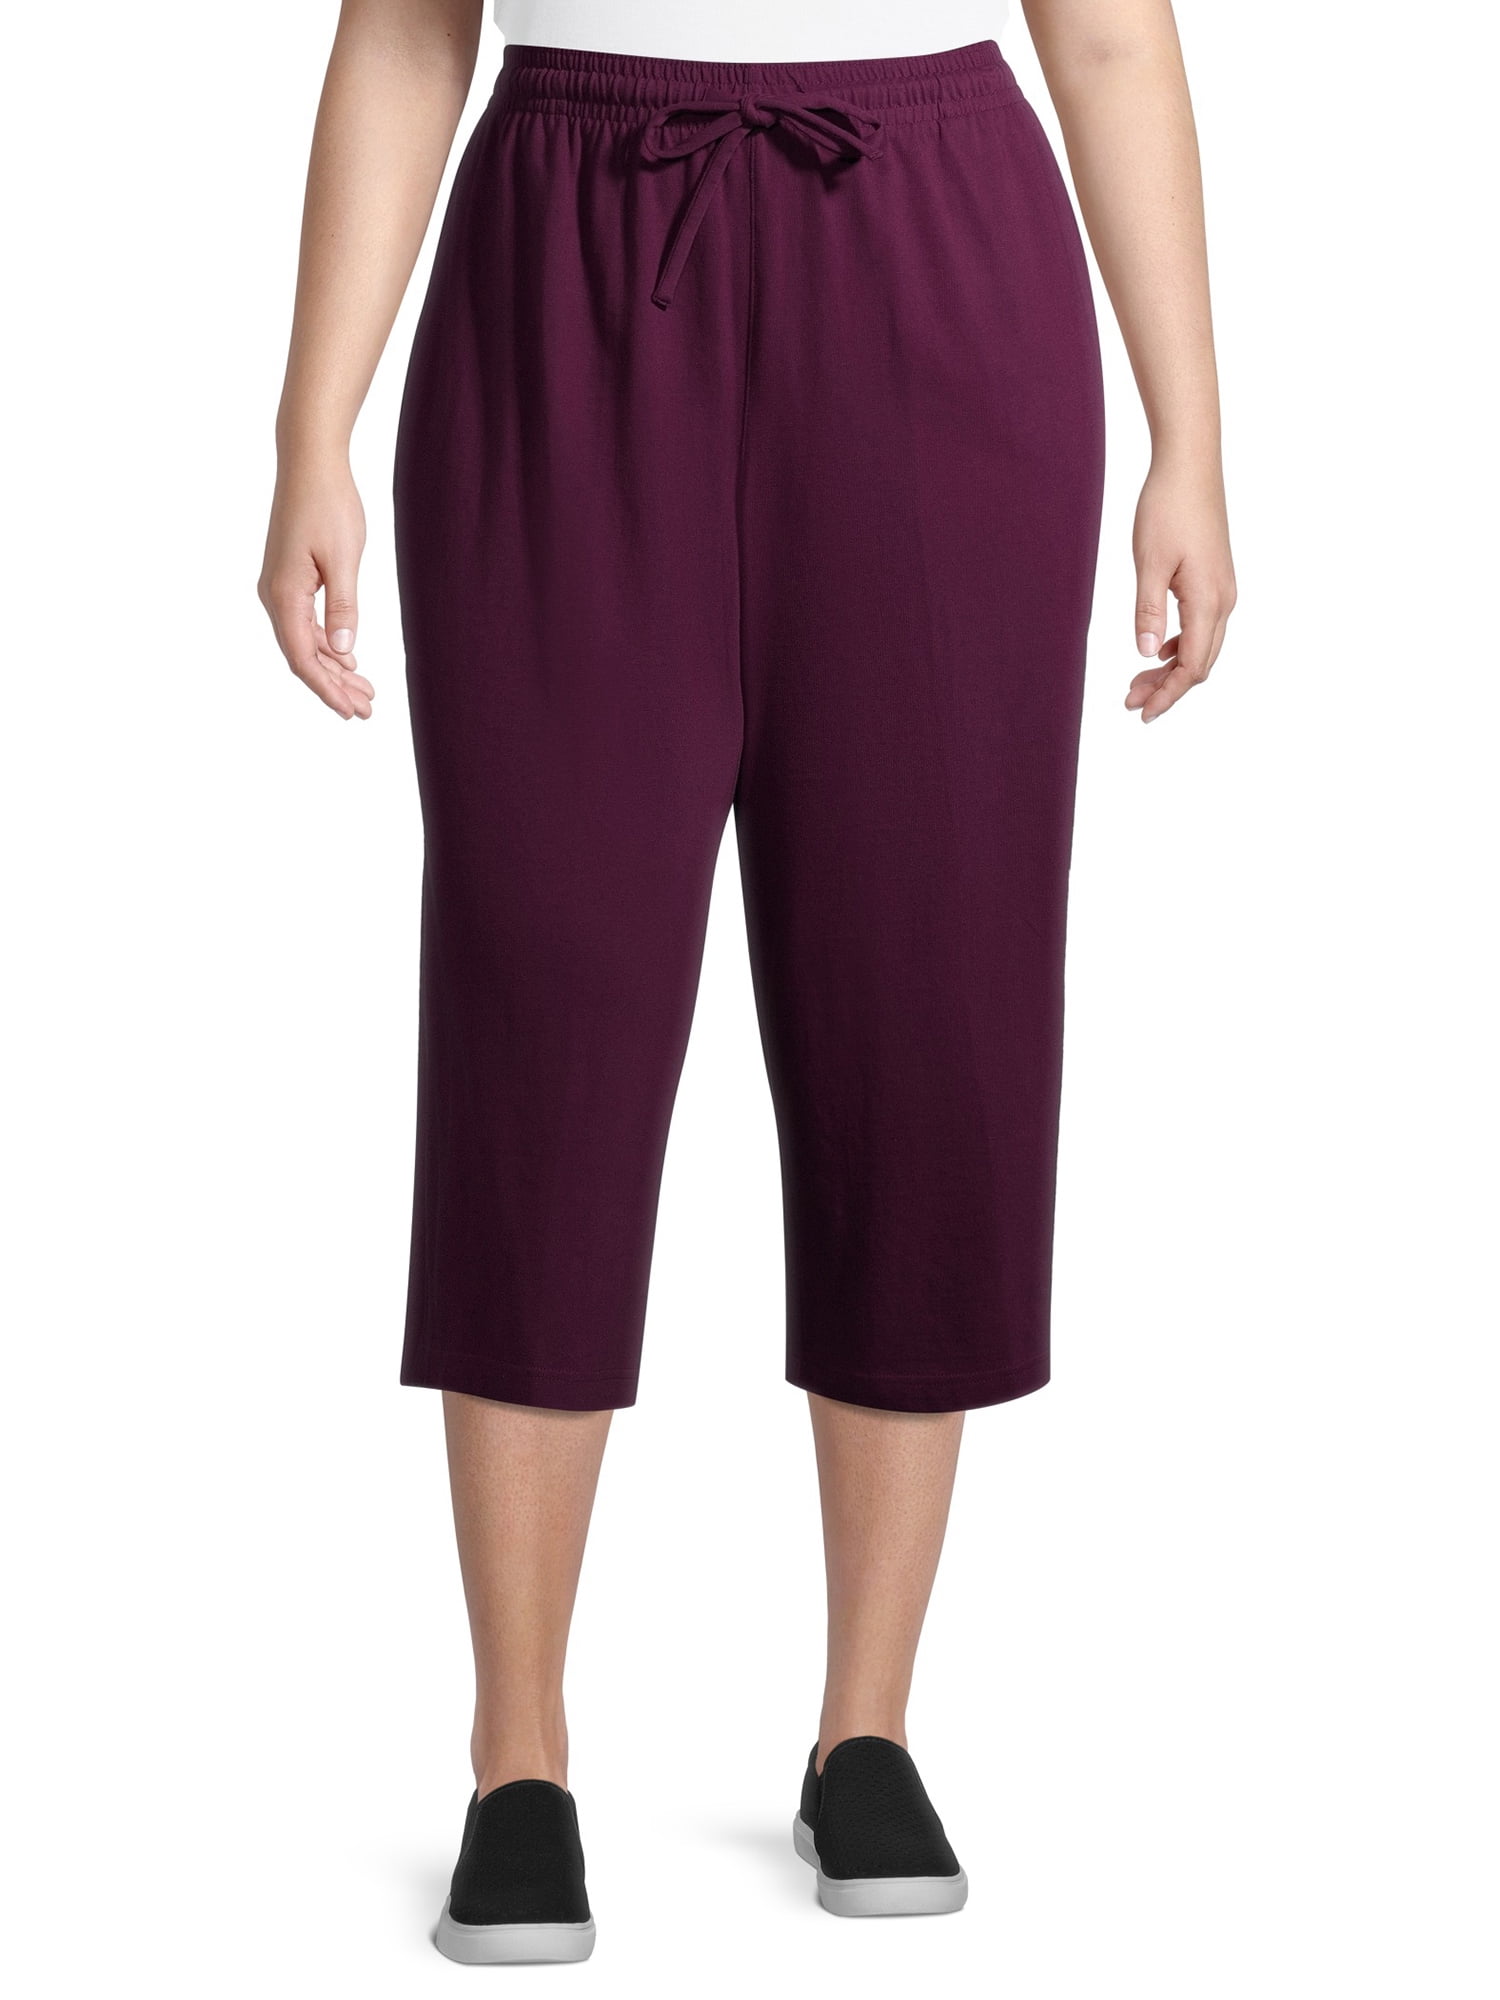 Terra & Sky Women's Plus Size Knit Capri Pants - Walmart.com